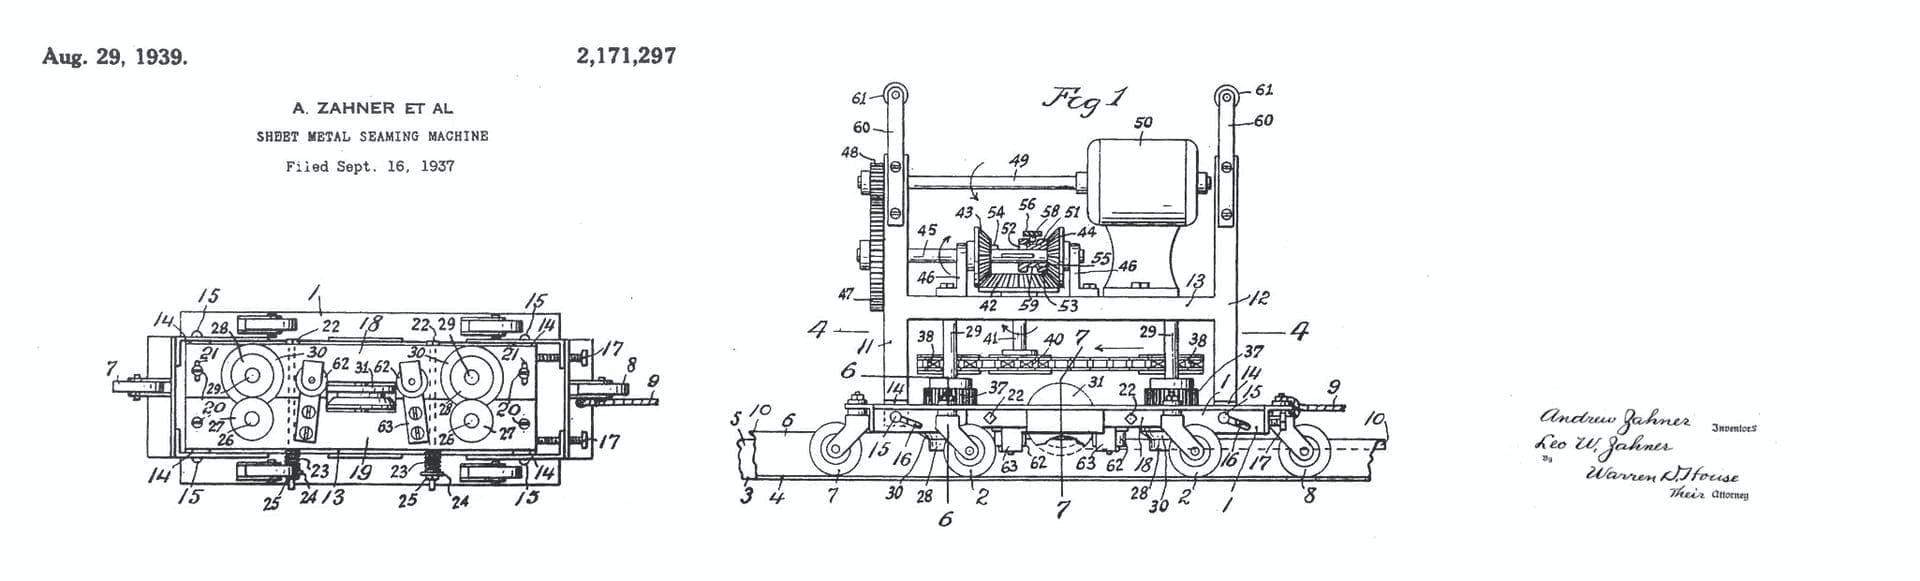 Zahner patent for historic Sheet Metal Seaming Machine.